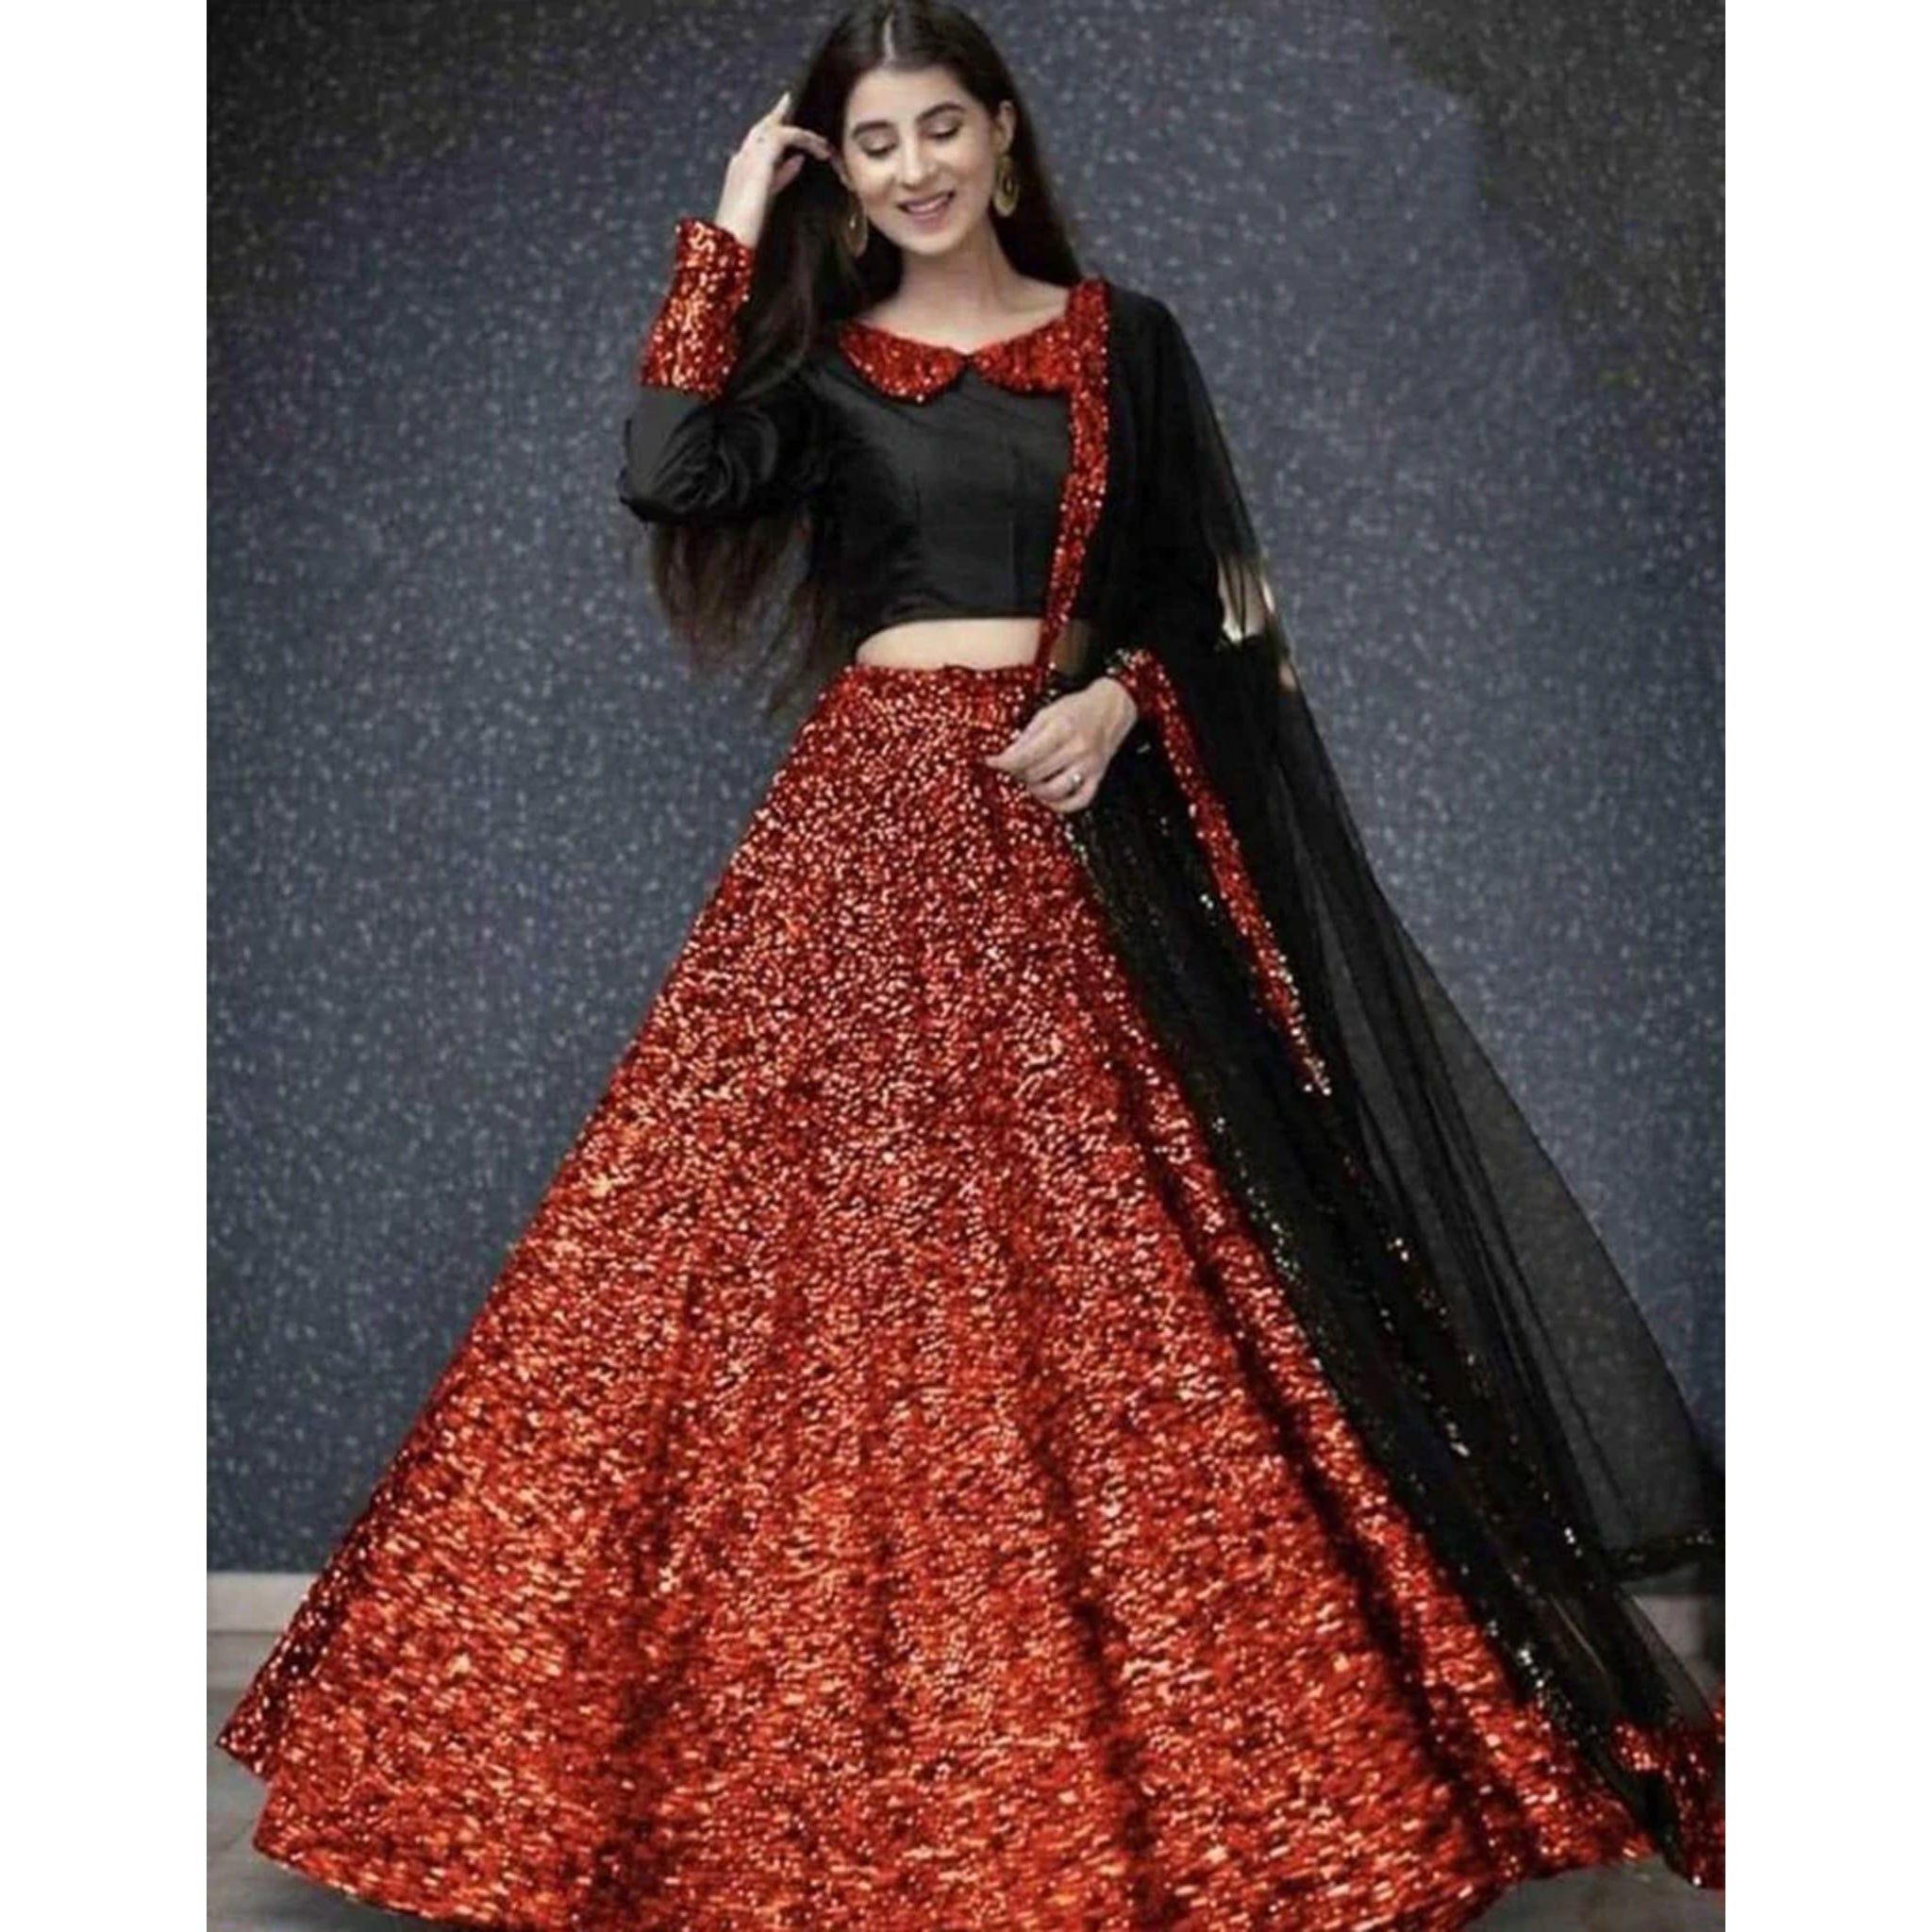 Buy stately-red-net-paisley-designs-lehenga-choli Wedding-Lehenga-Choli- Designs- at Amazon.in